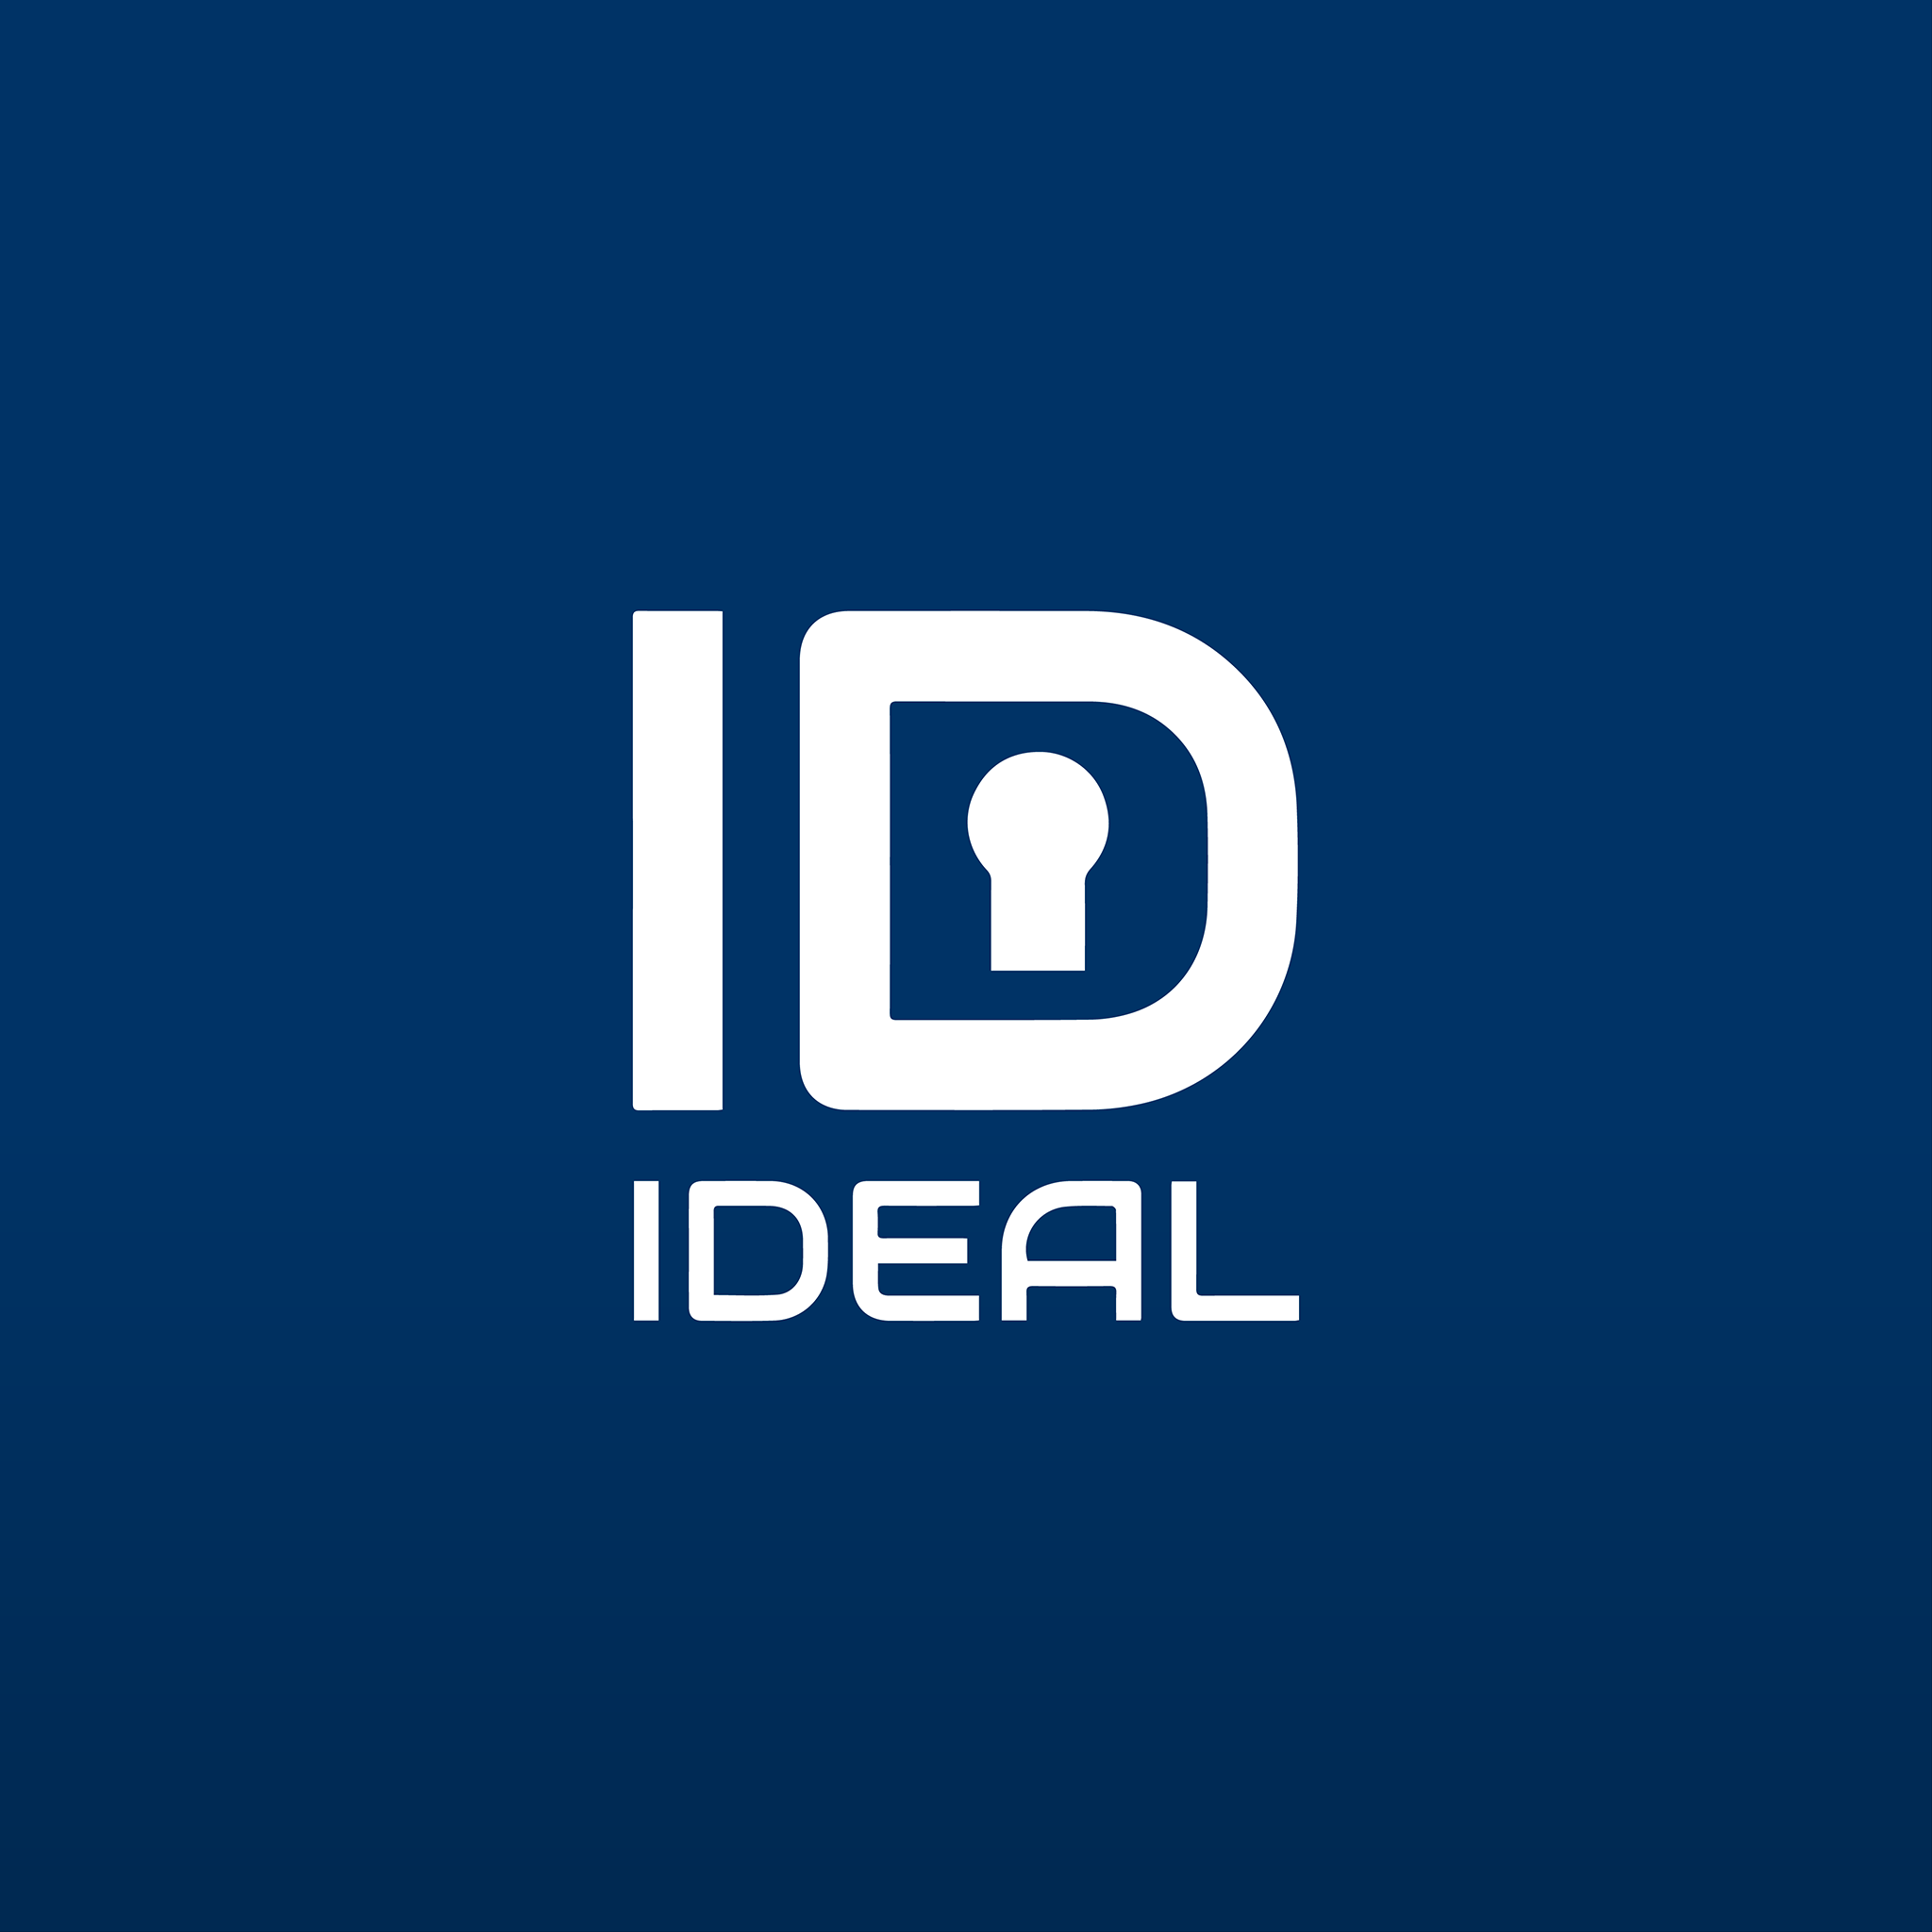 id ideal